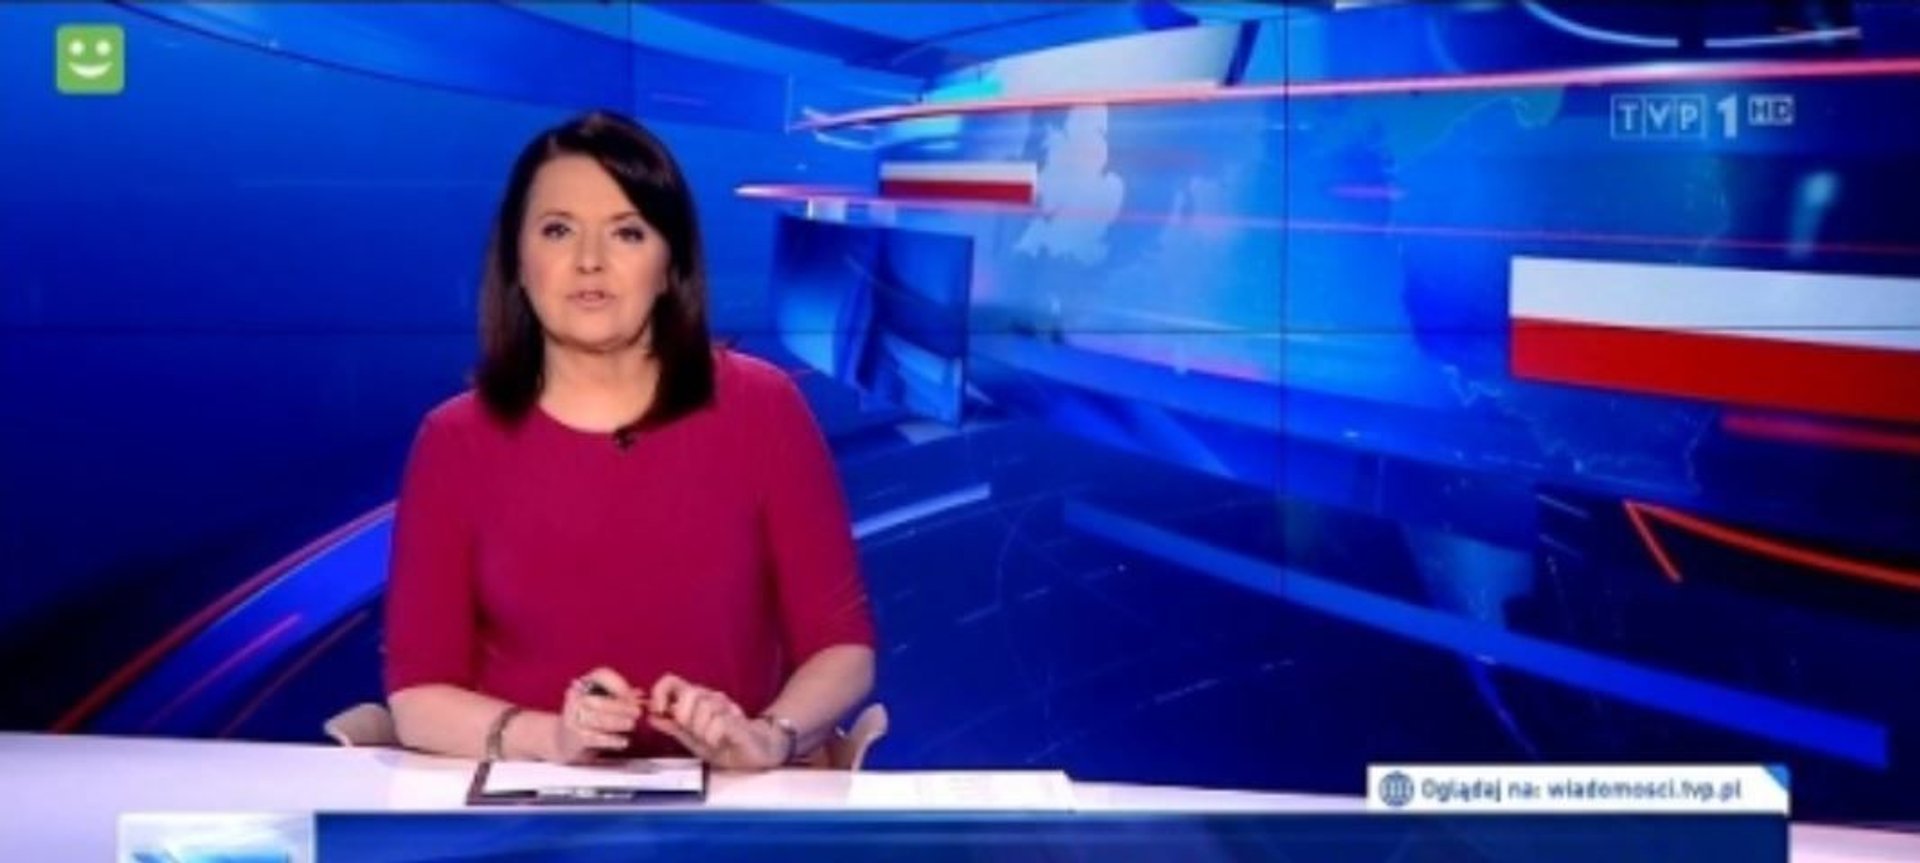 "Wiadomości" TVP